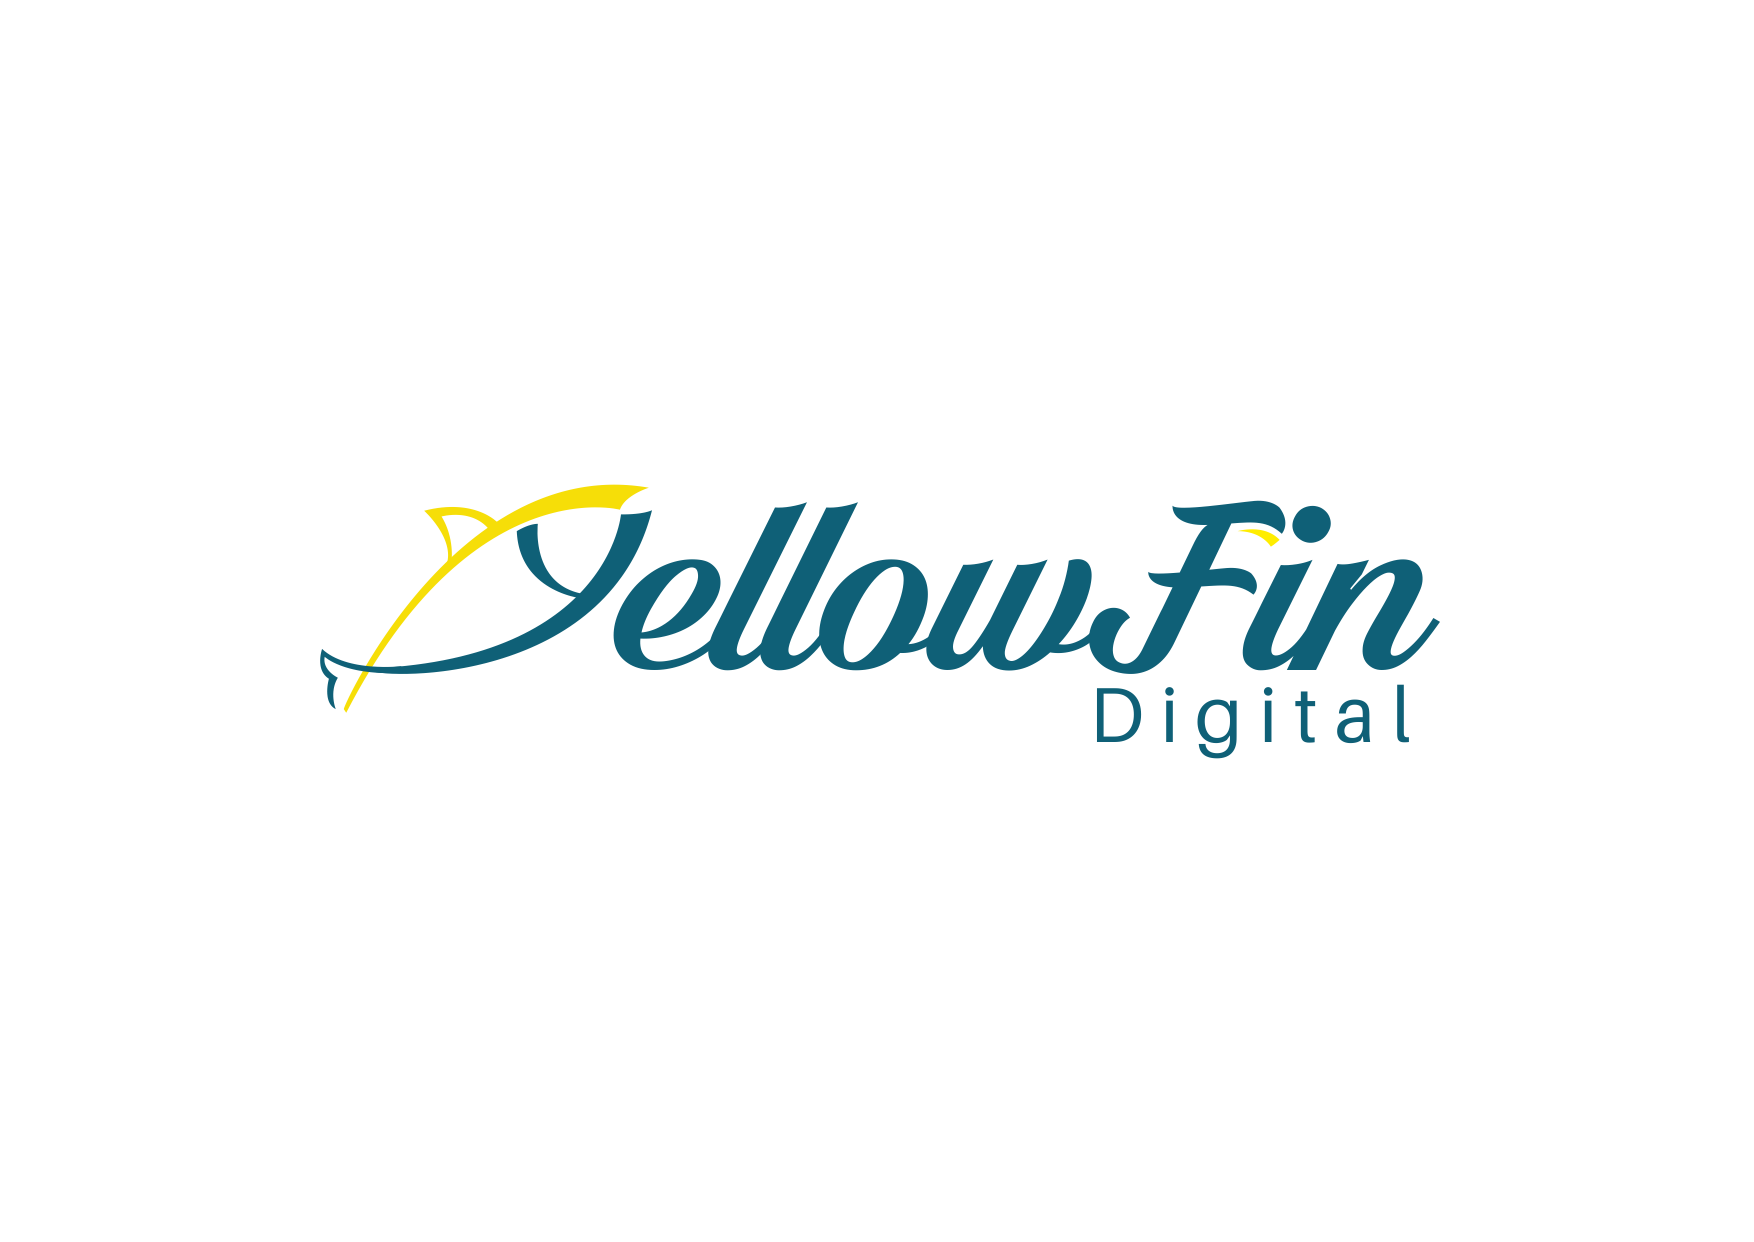 Best Social Media Marketing Company Logo: YellowFin Digital